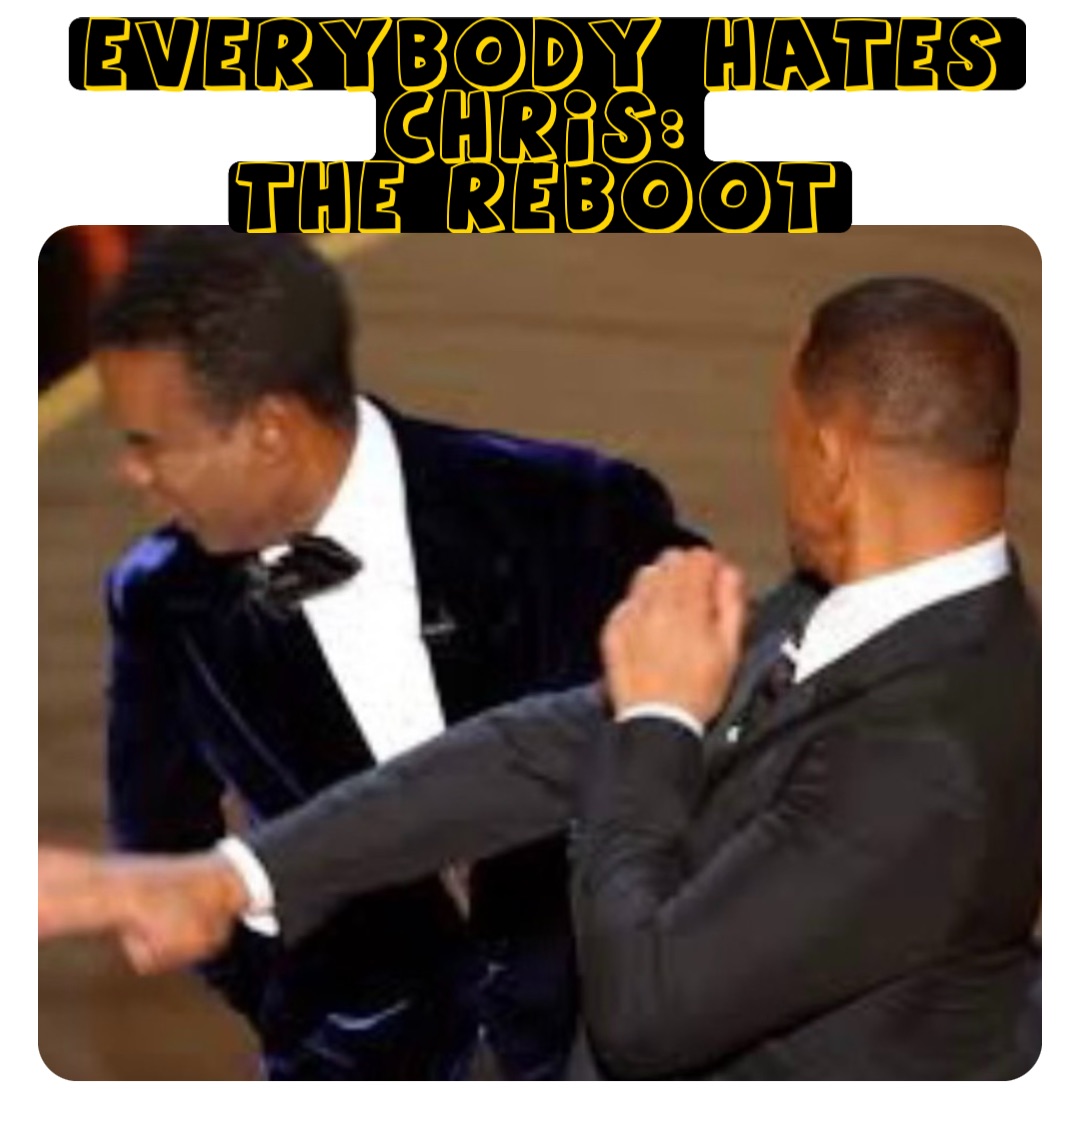 Everybody Hates Chris:
The Reboot